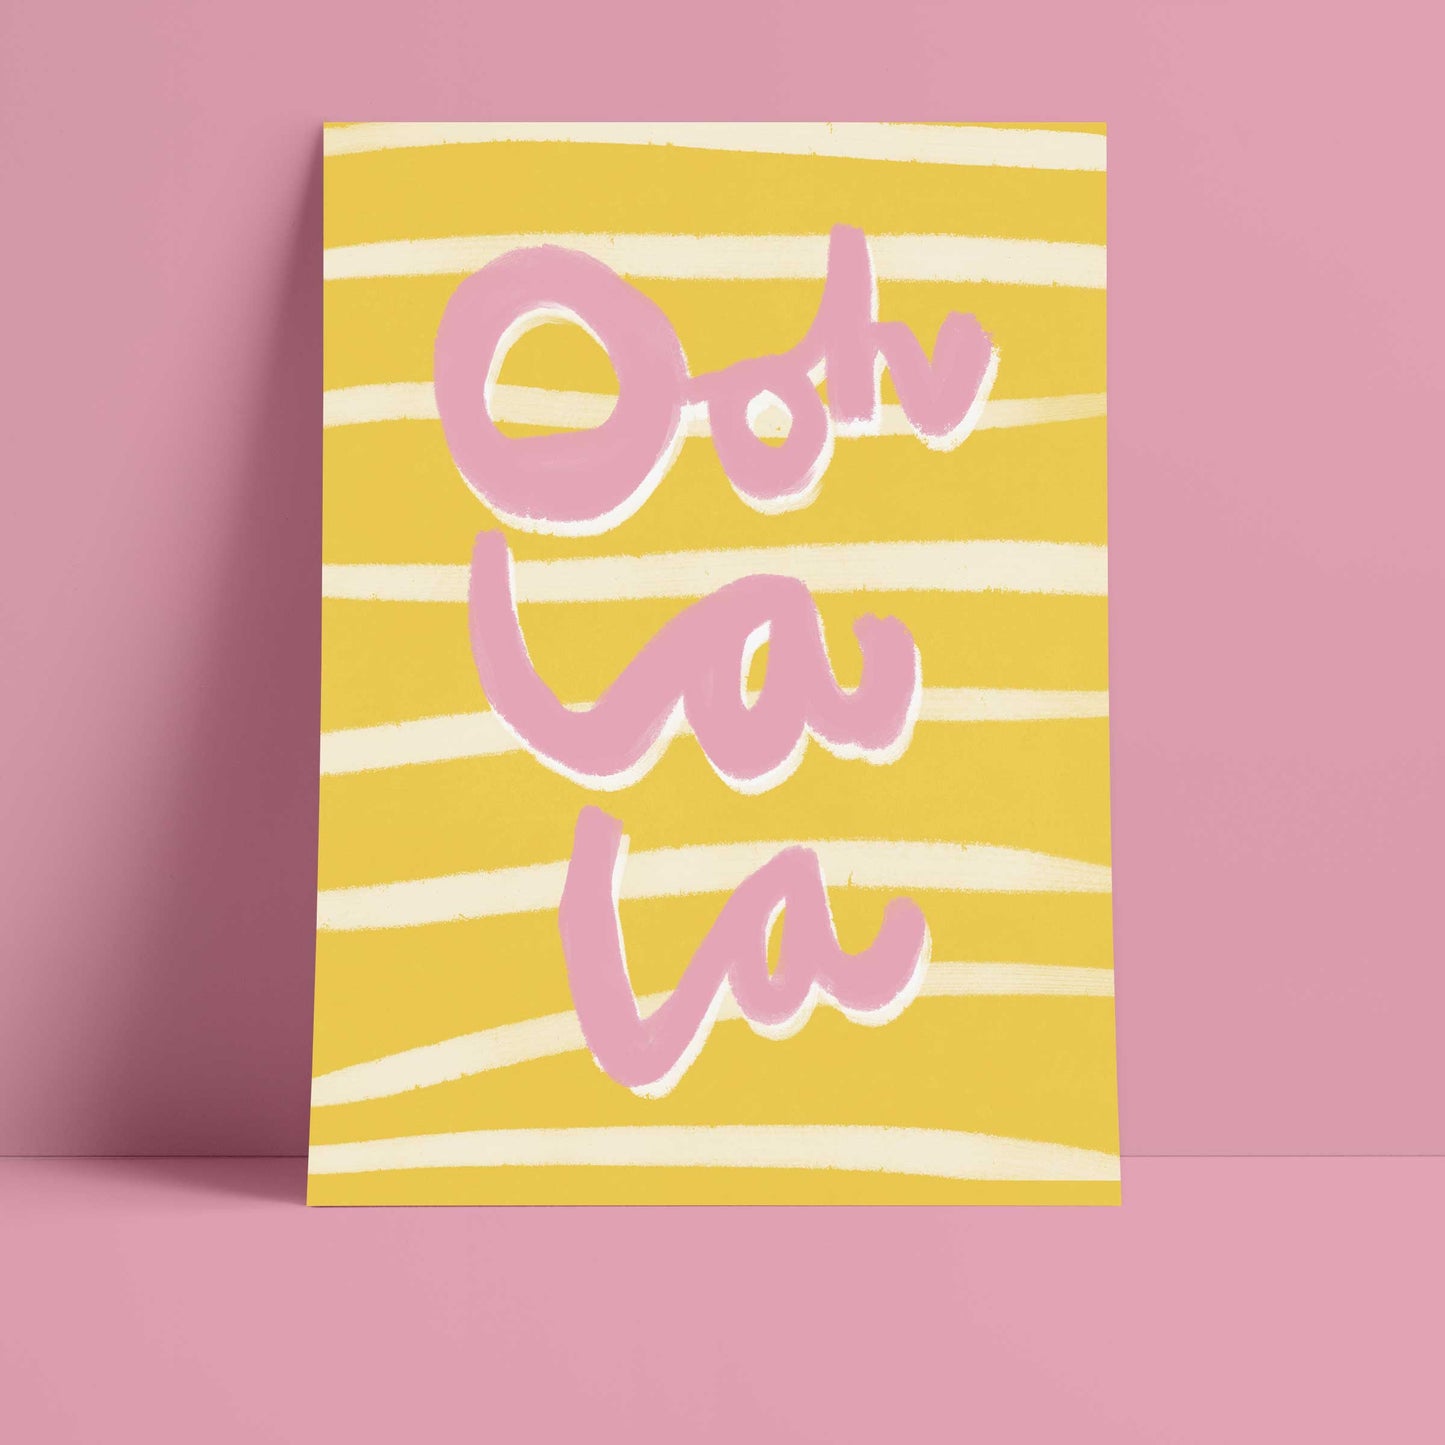 Ooh La La Art Print - Yellow, White and Pink Fine Art Print